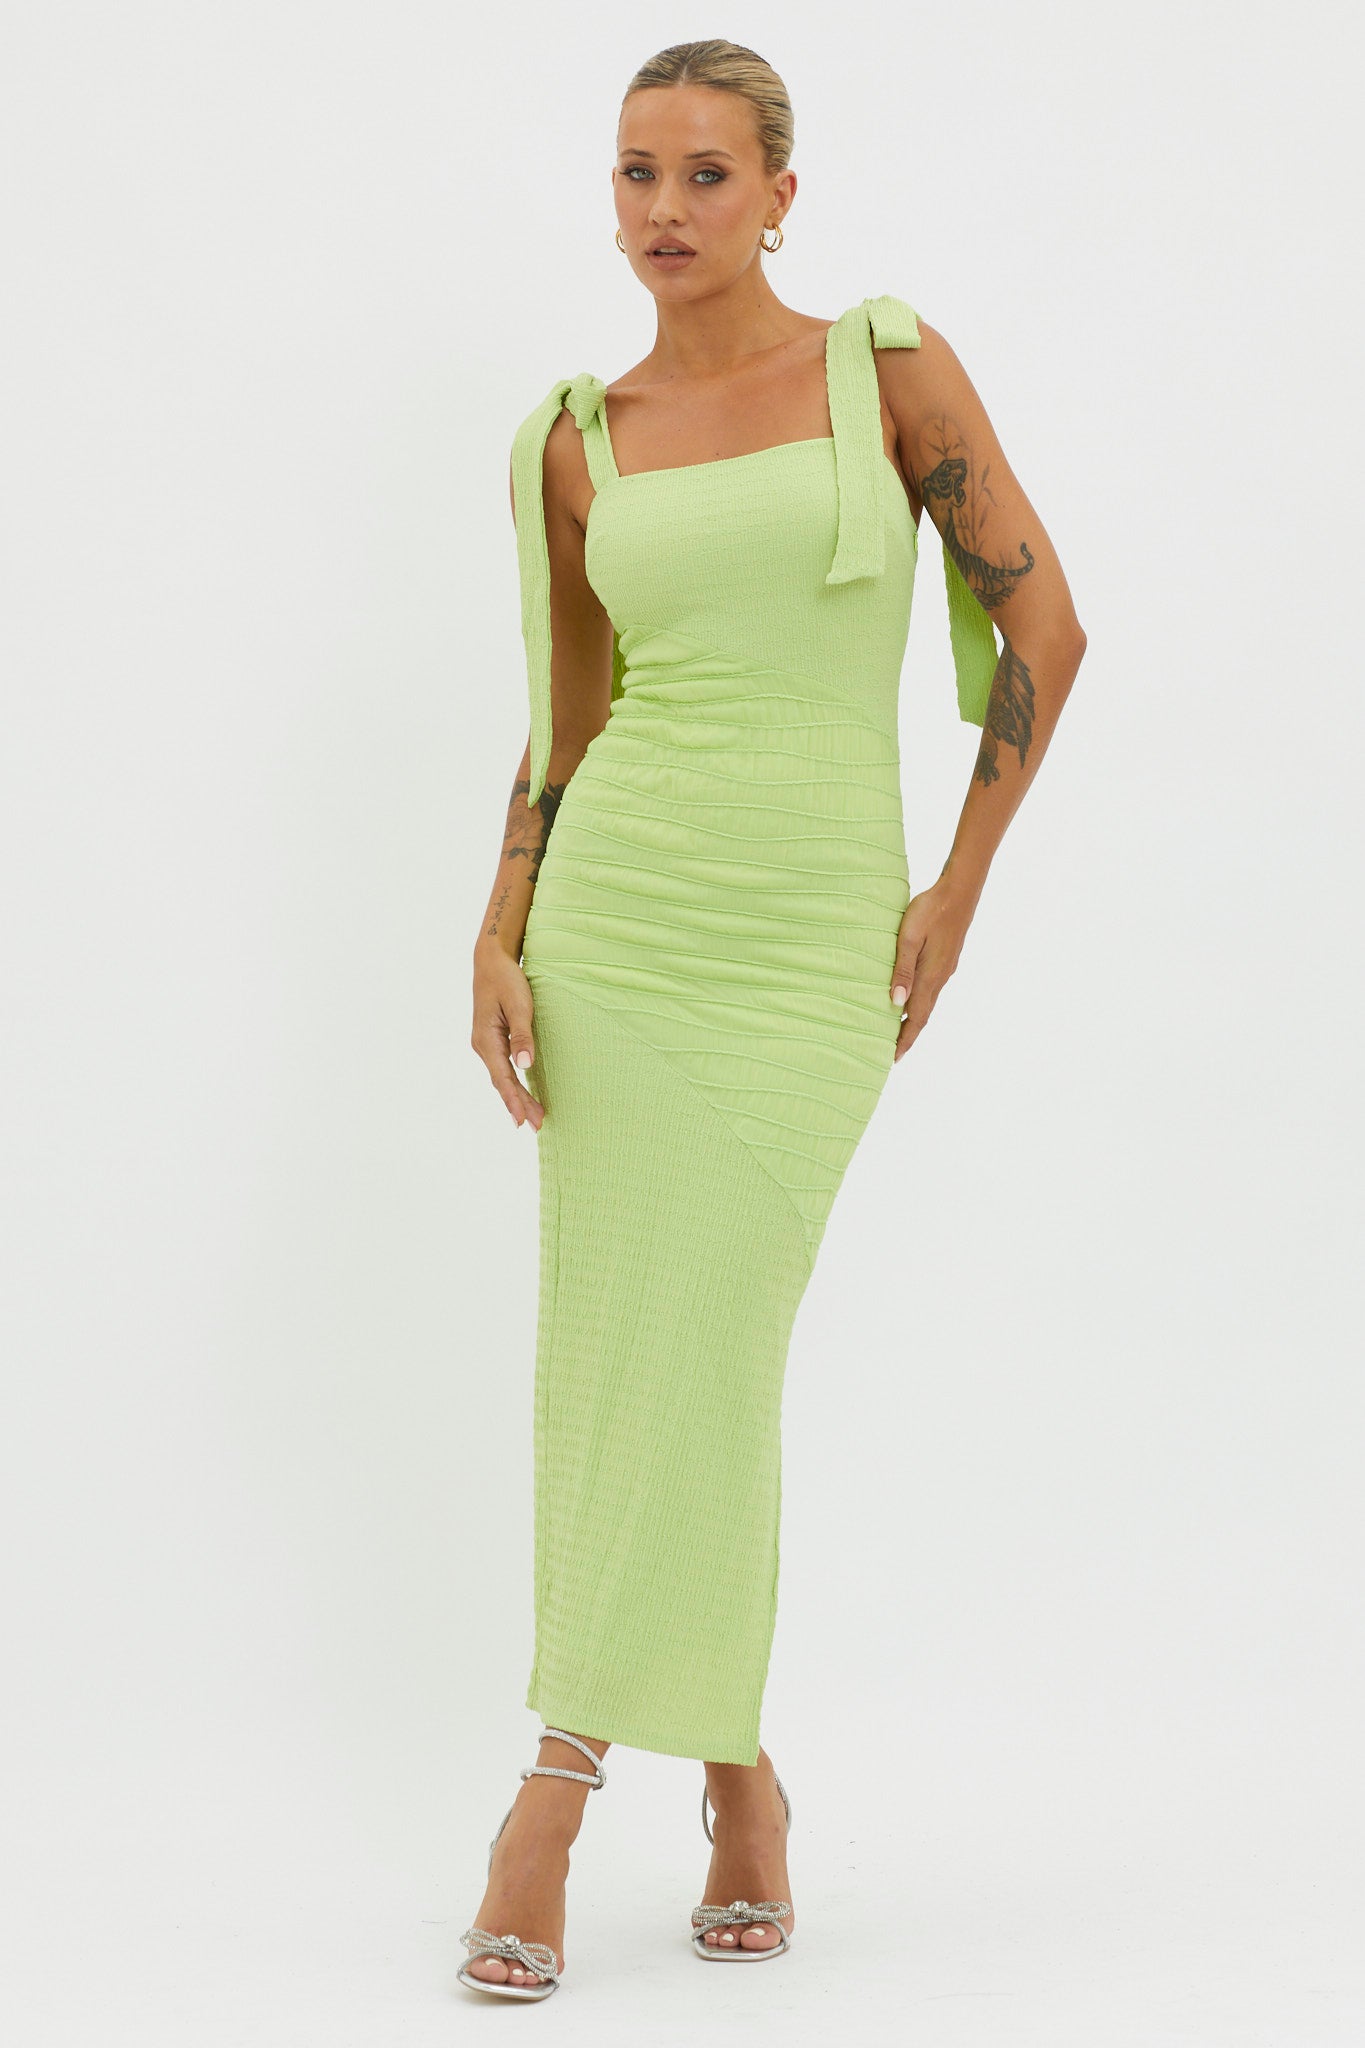 Shop the Bindi Puckered Tied Strap Dress Green | Selfie Leslie